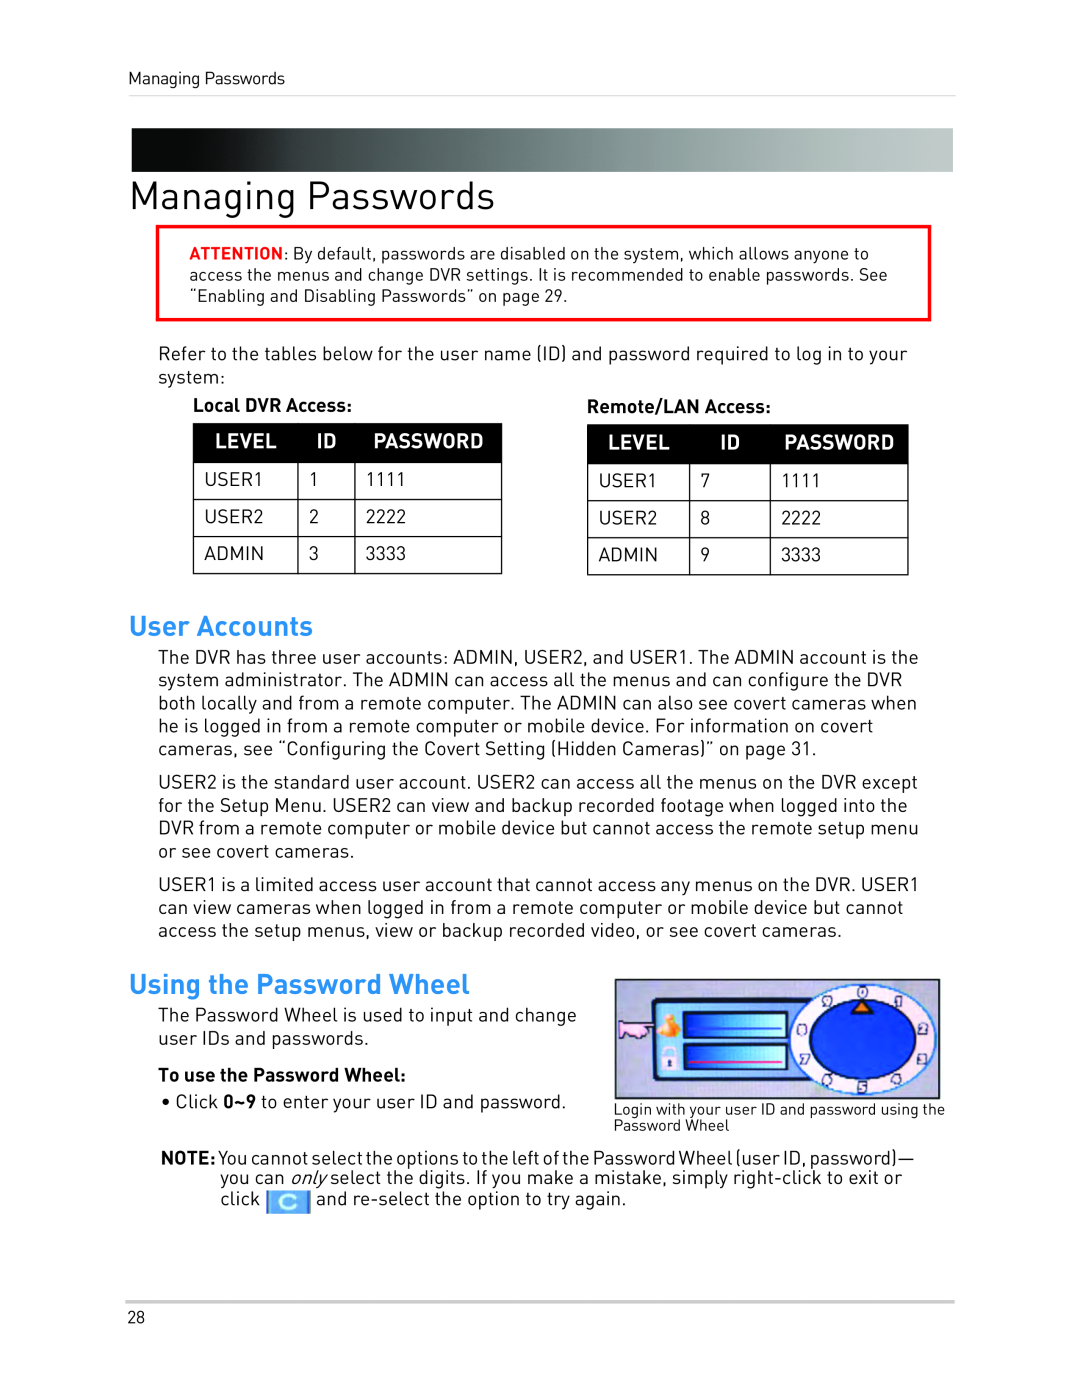 LOREX Technology LH3481001C8B Managing Passwords, User Accounts, Using the Password Wheel, Level, Local DVR Access 